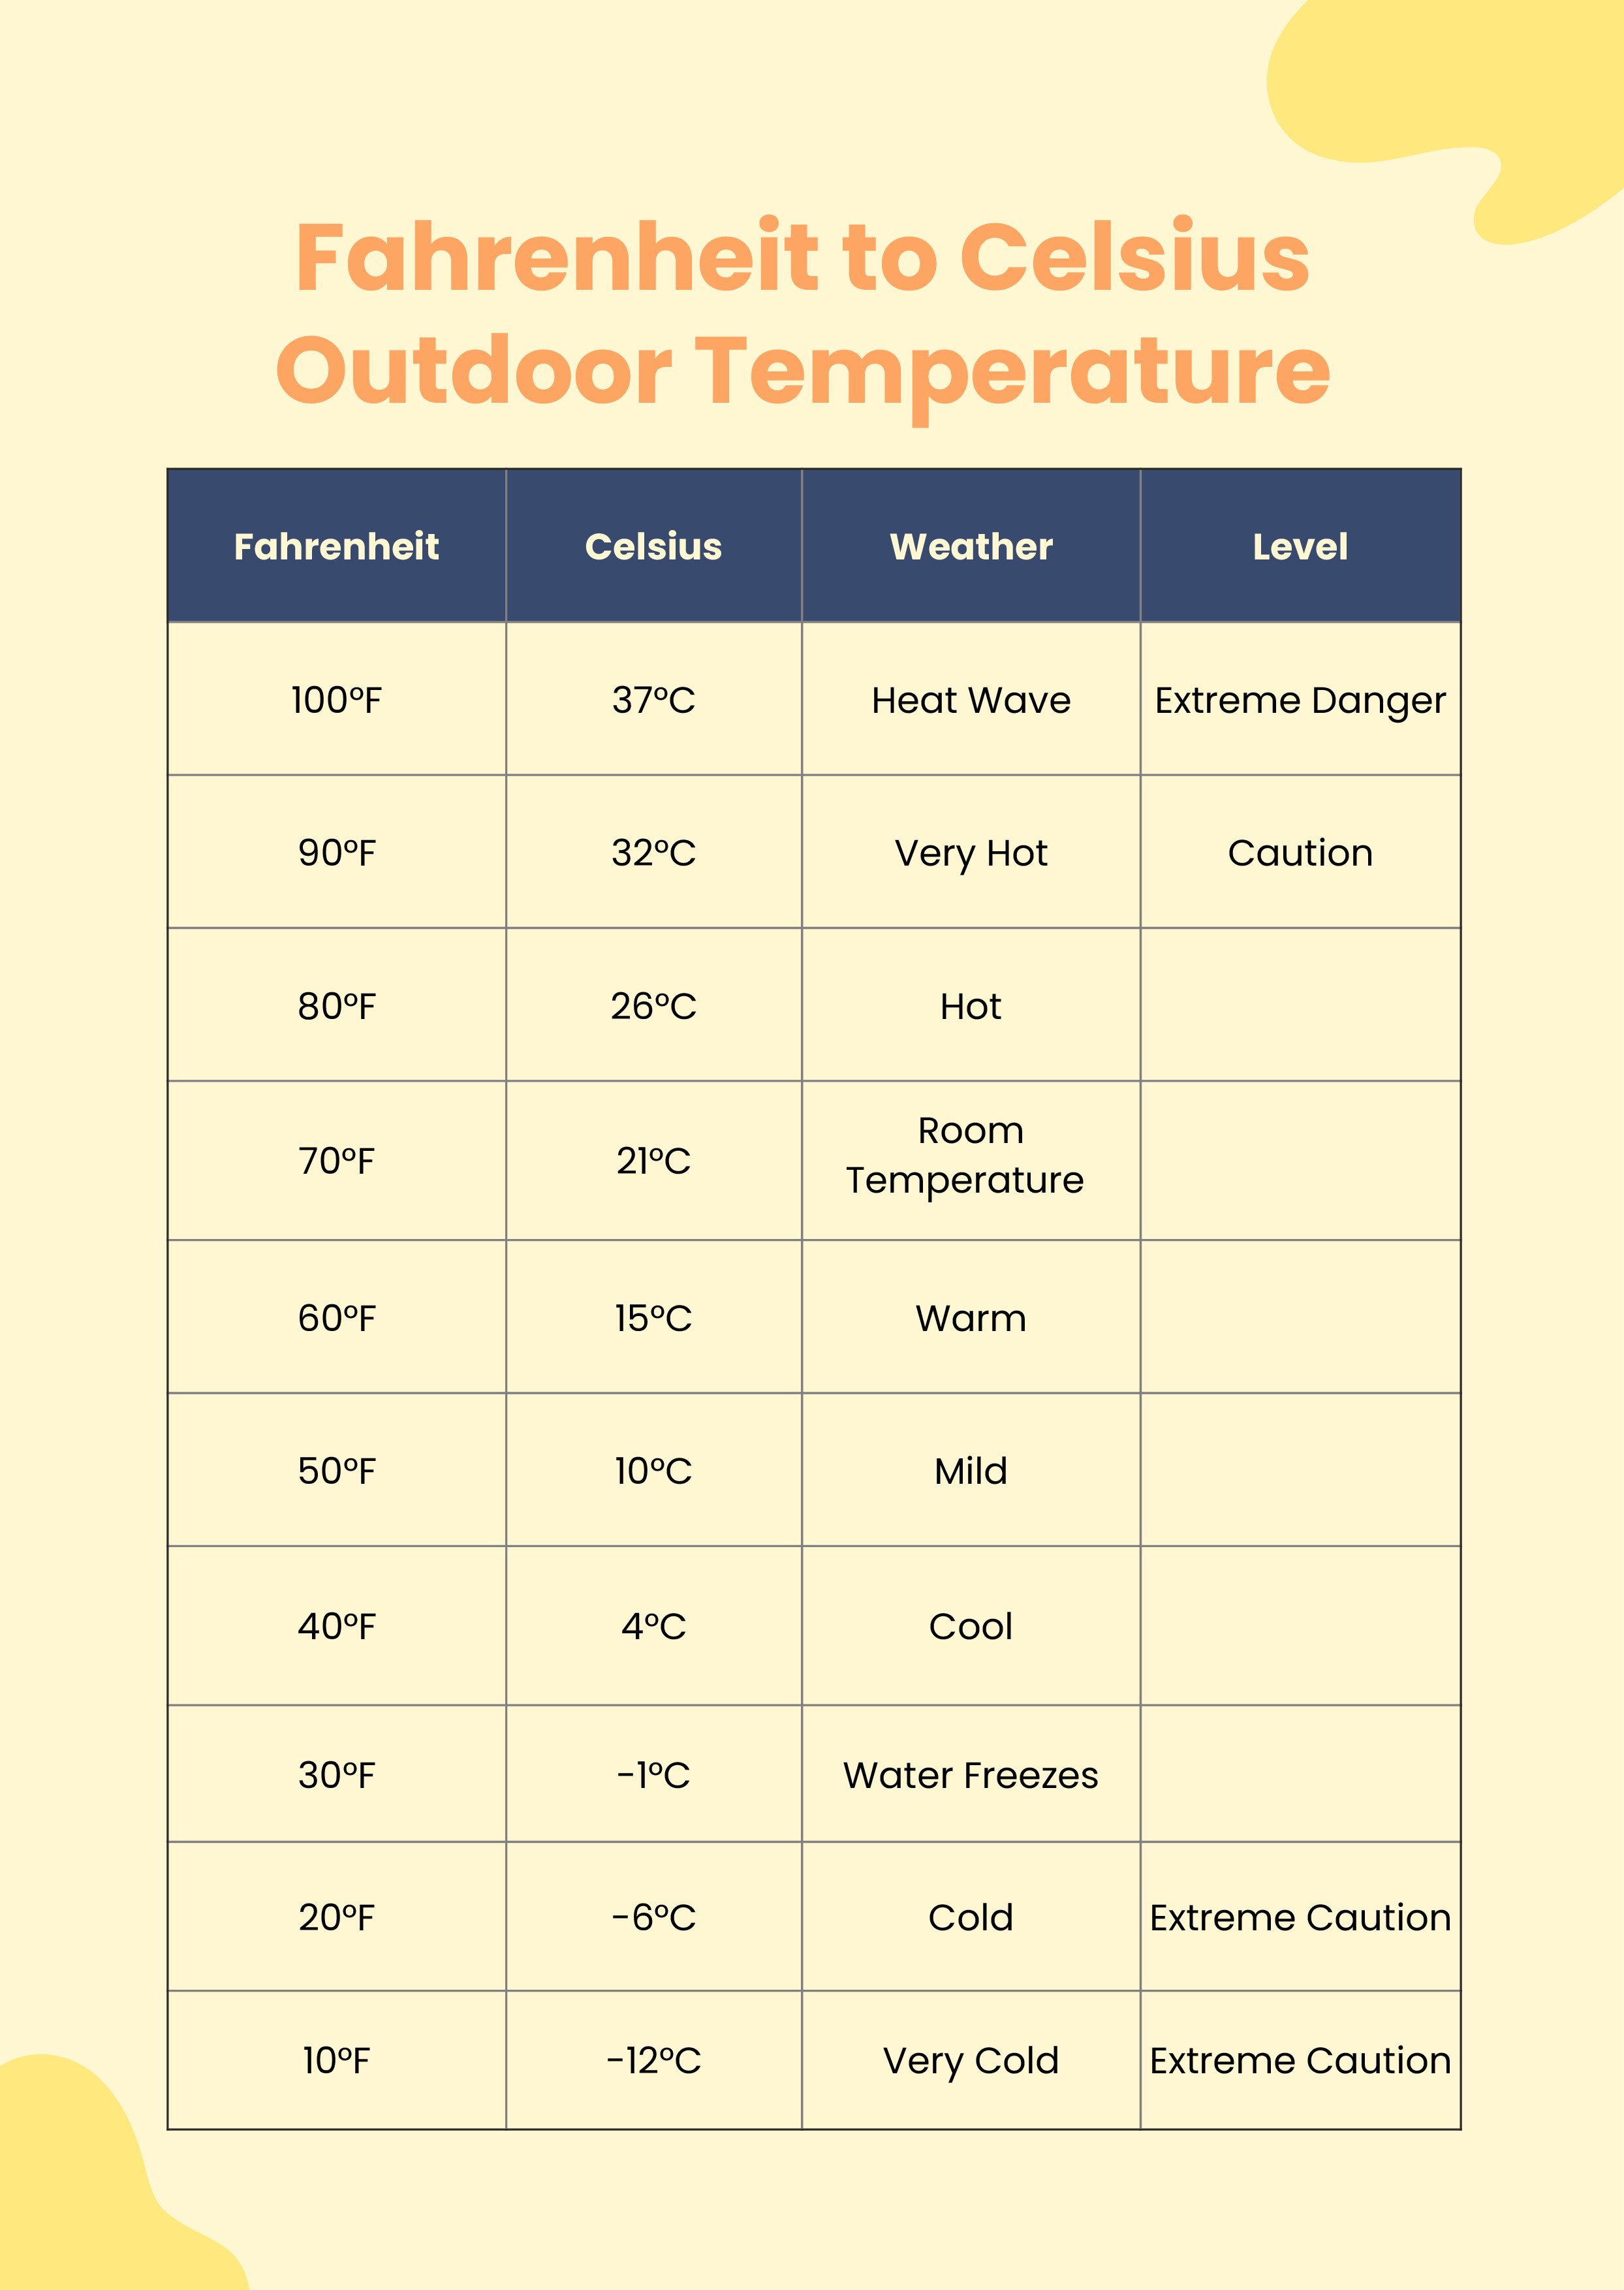 https://images.template.net/116762/outdoor-temperature-conversion-chart-jkbcd.jpg